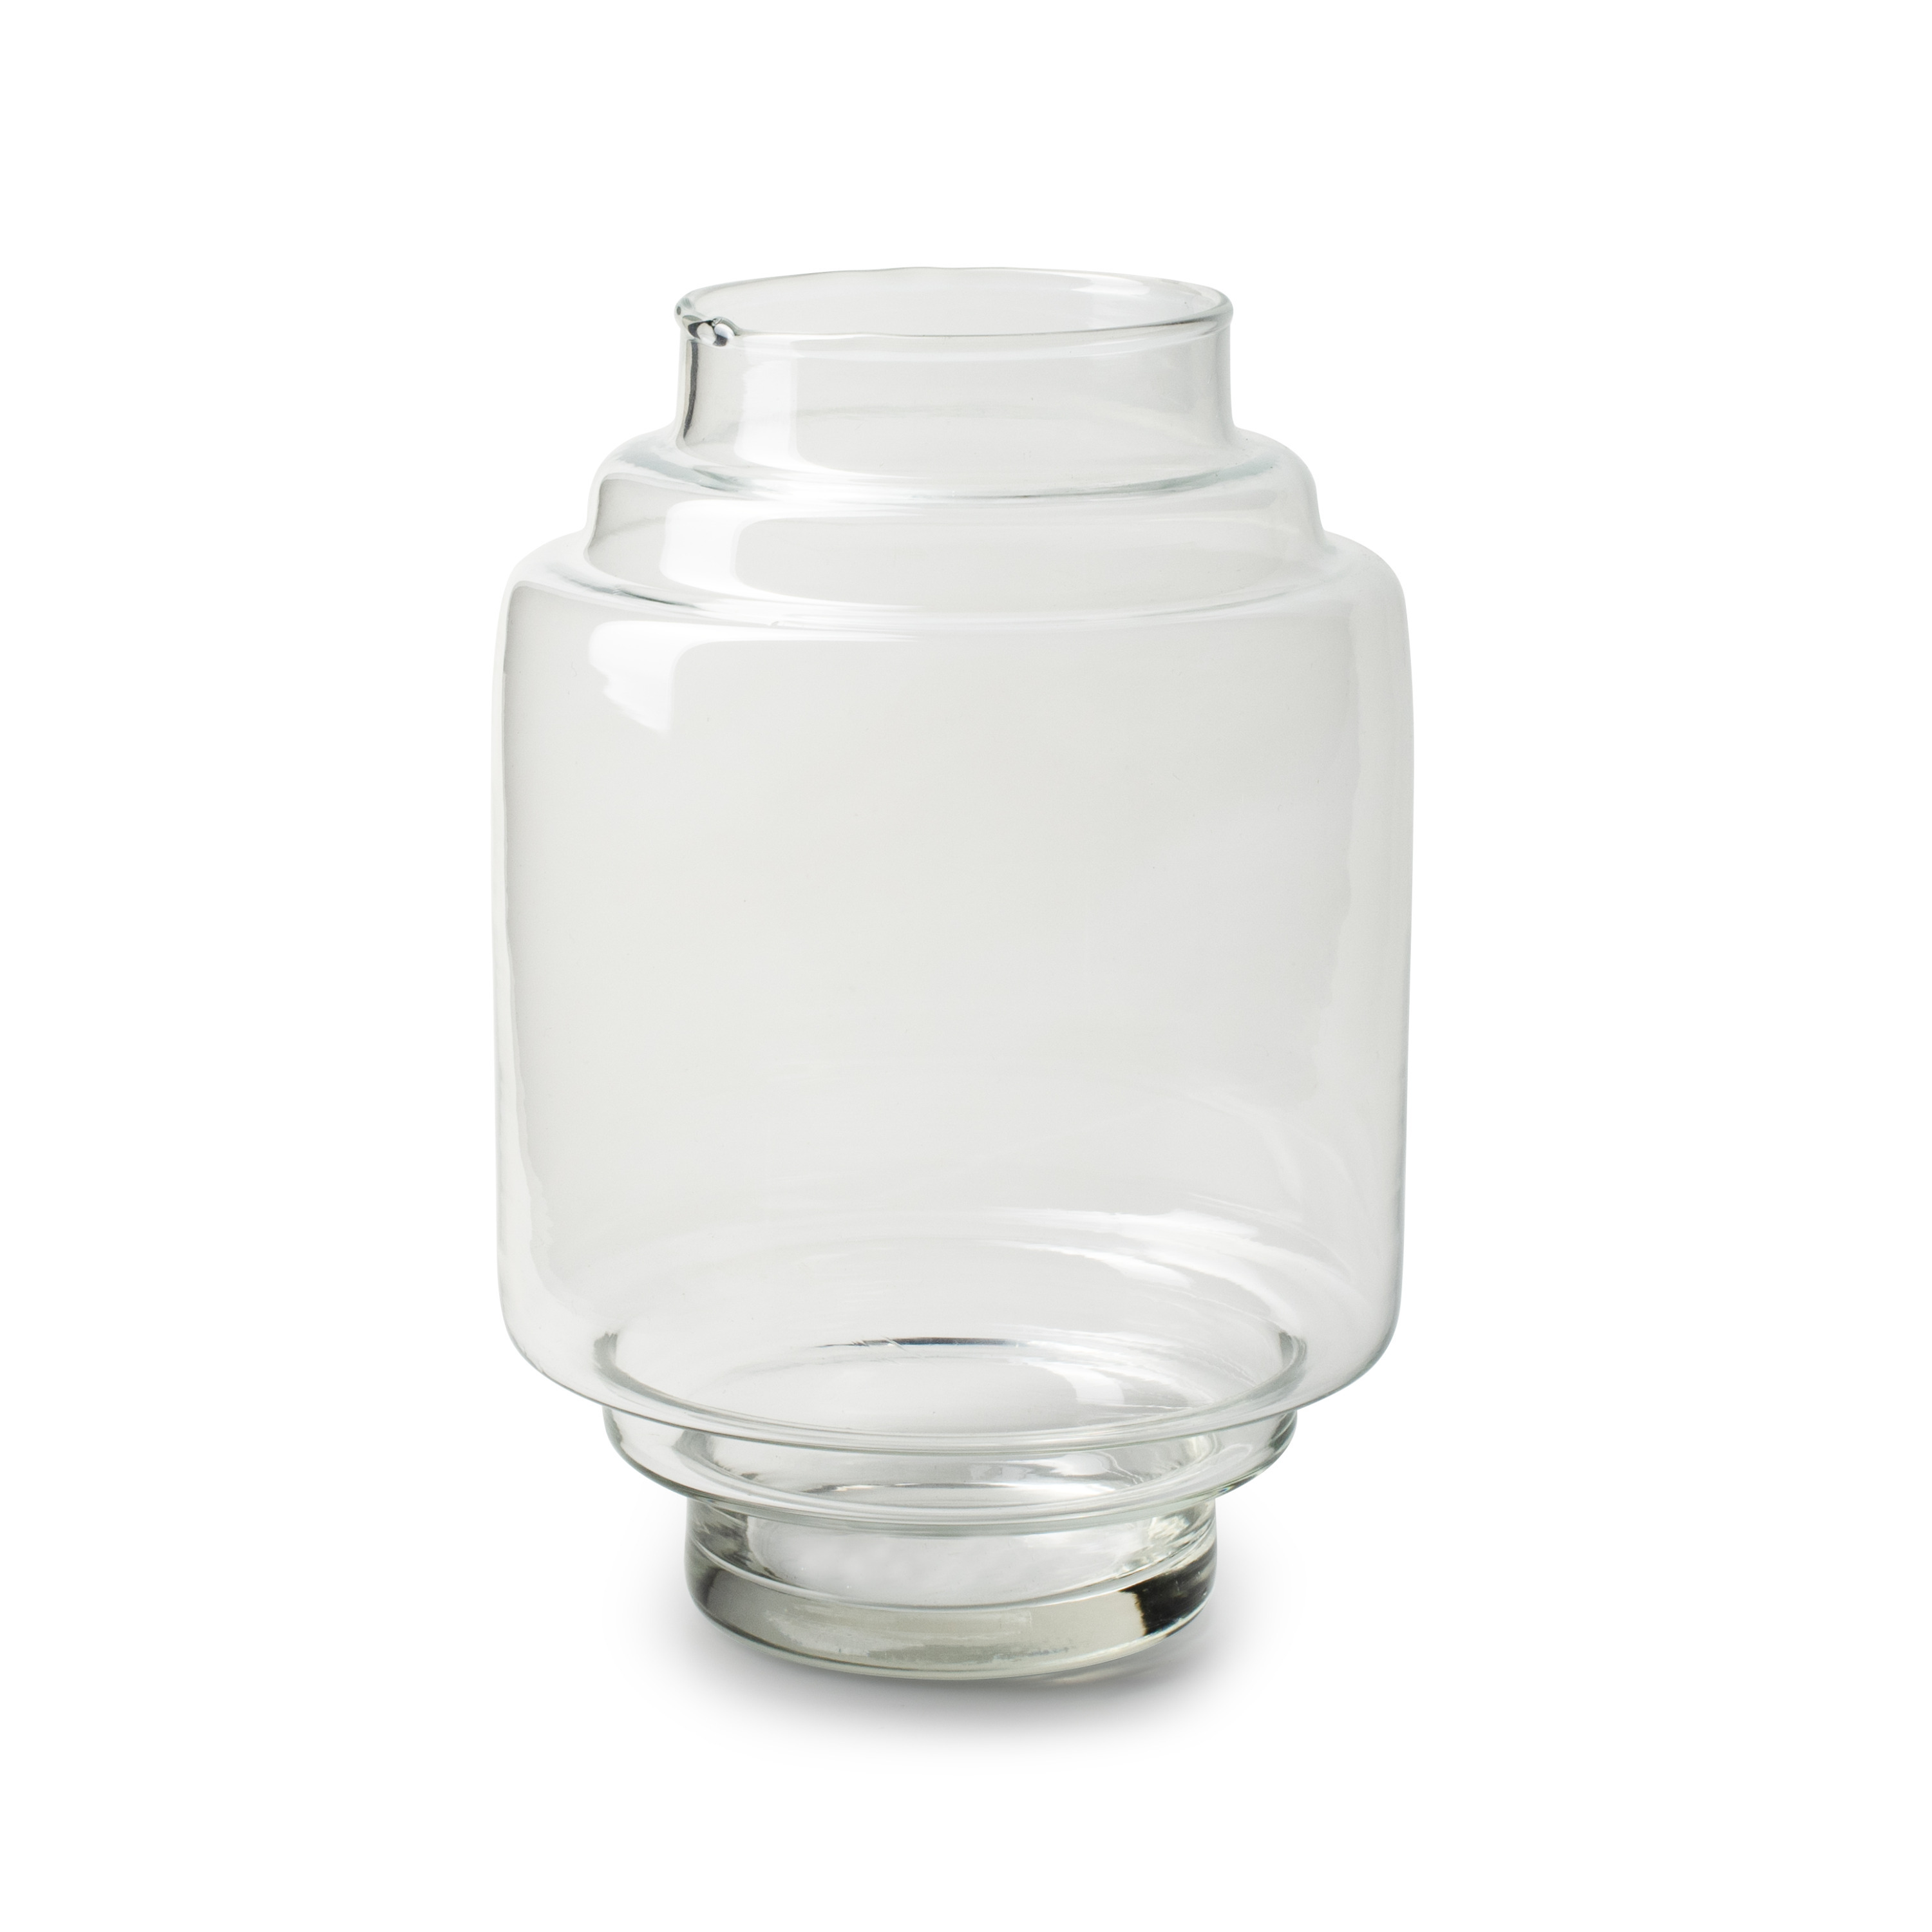 Bloemenvaas Lotus helder transparant glas glas D17xH25 cm - trap vaas